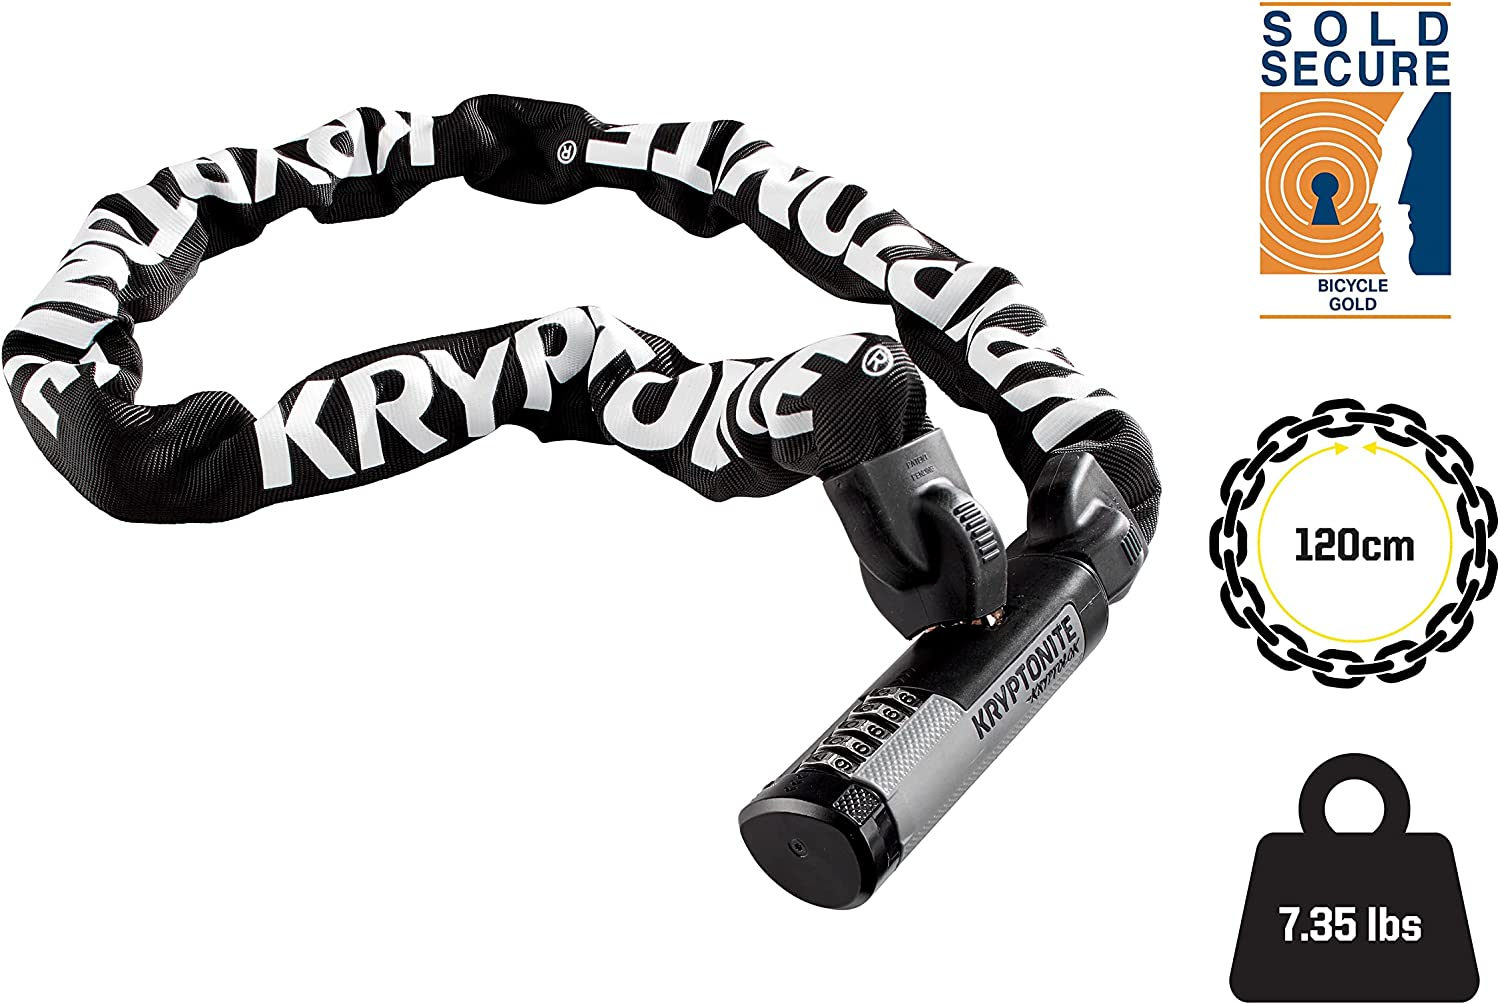 A black and white Kryptonite Kryptolok 912 bike lock providing BICYCLE SECURITY.